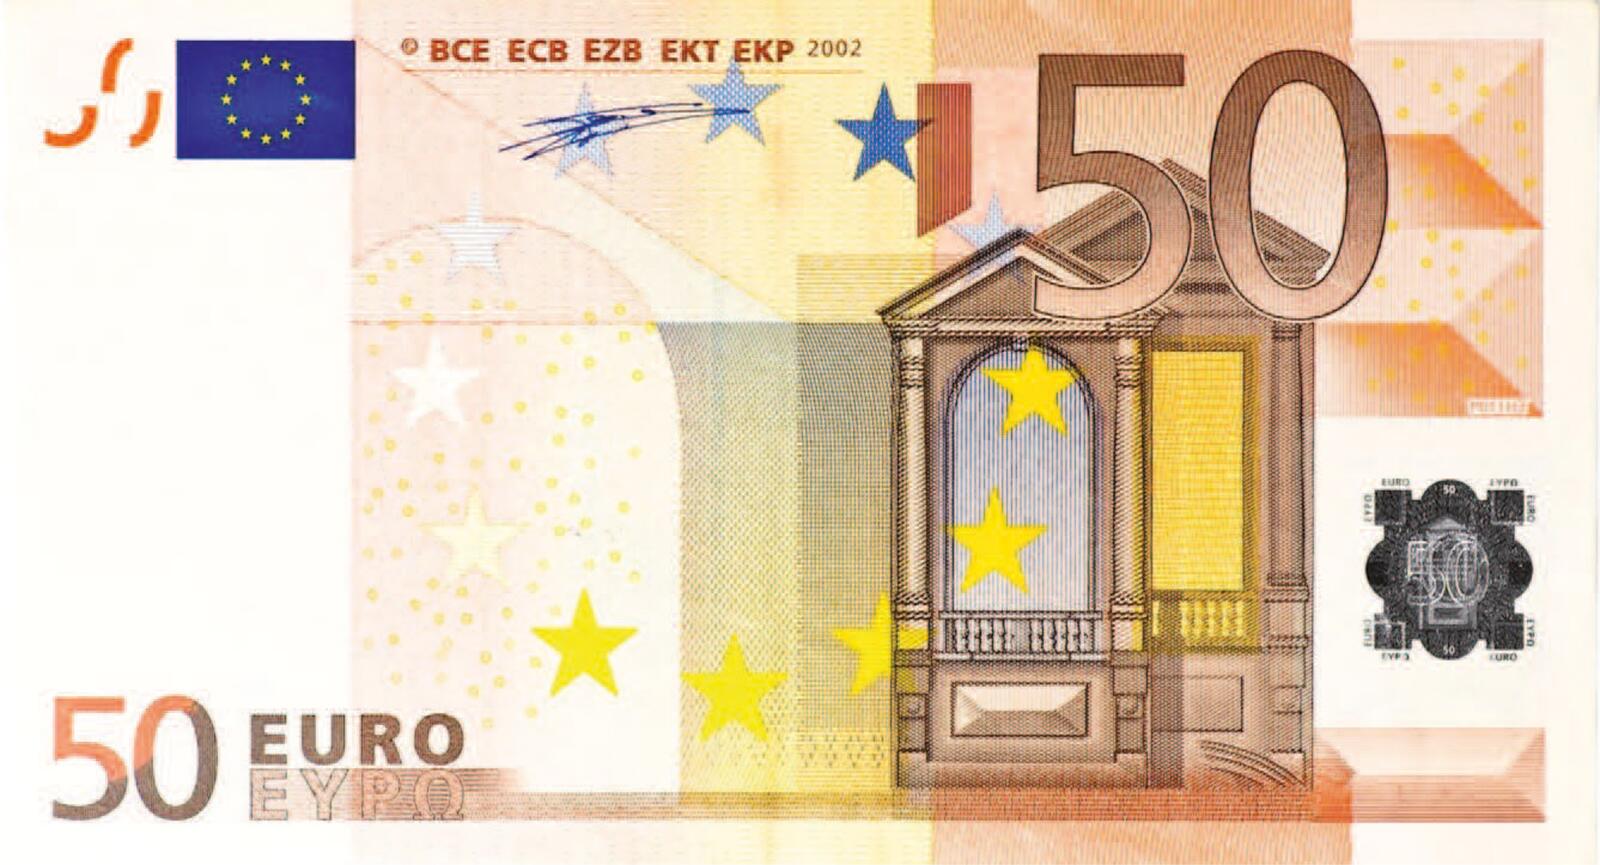 Free photo 50 euro bill